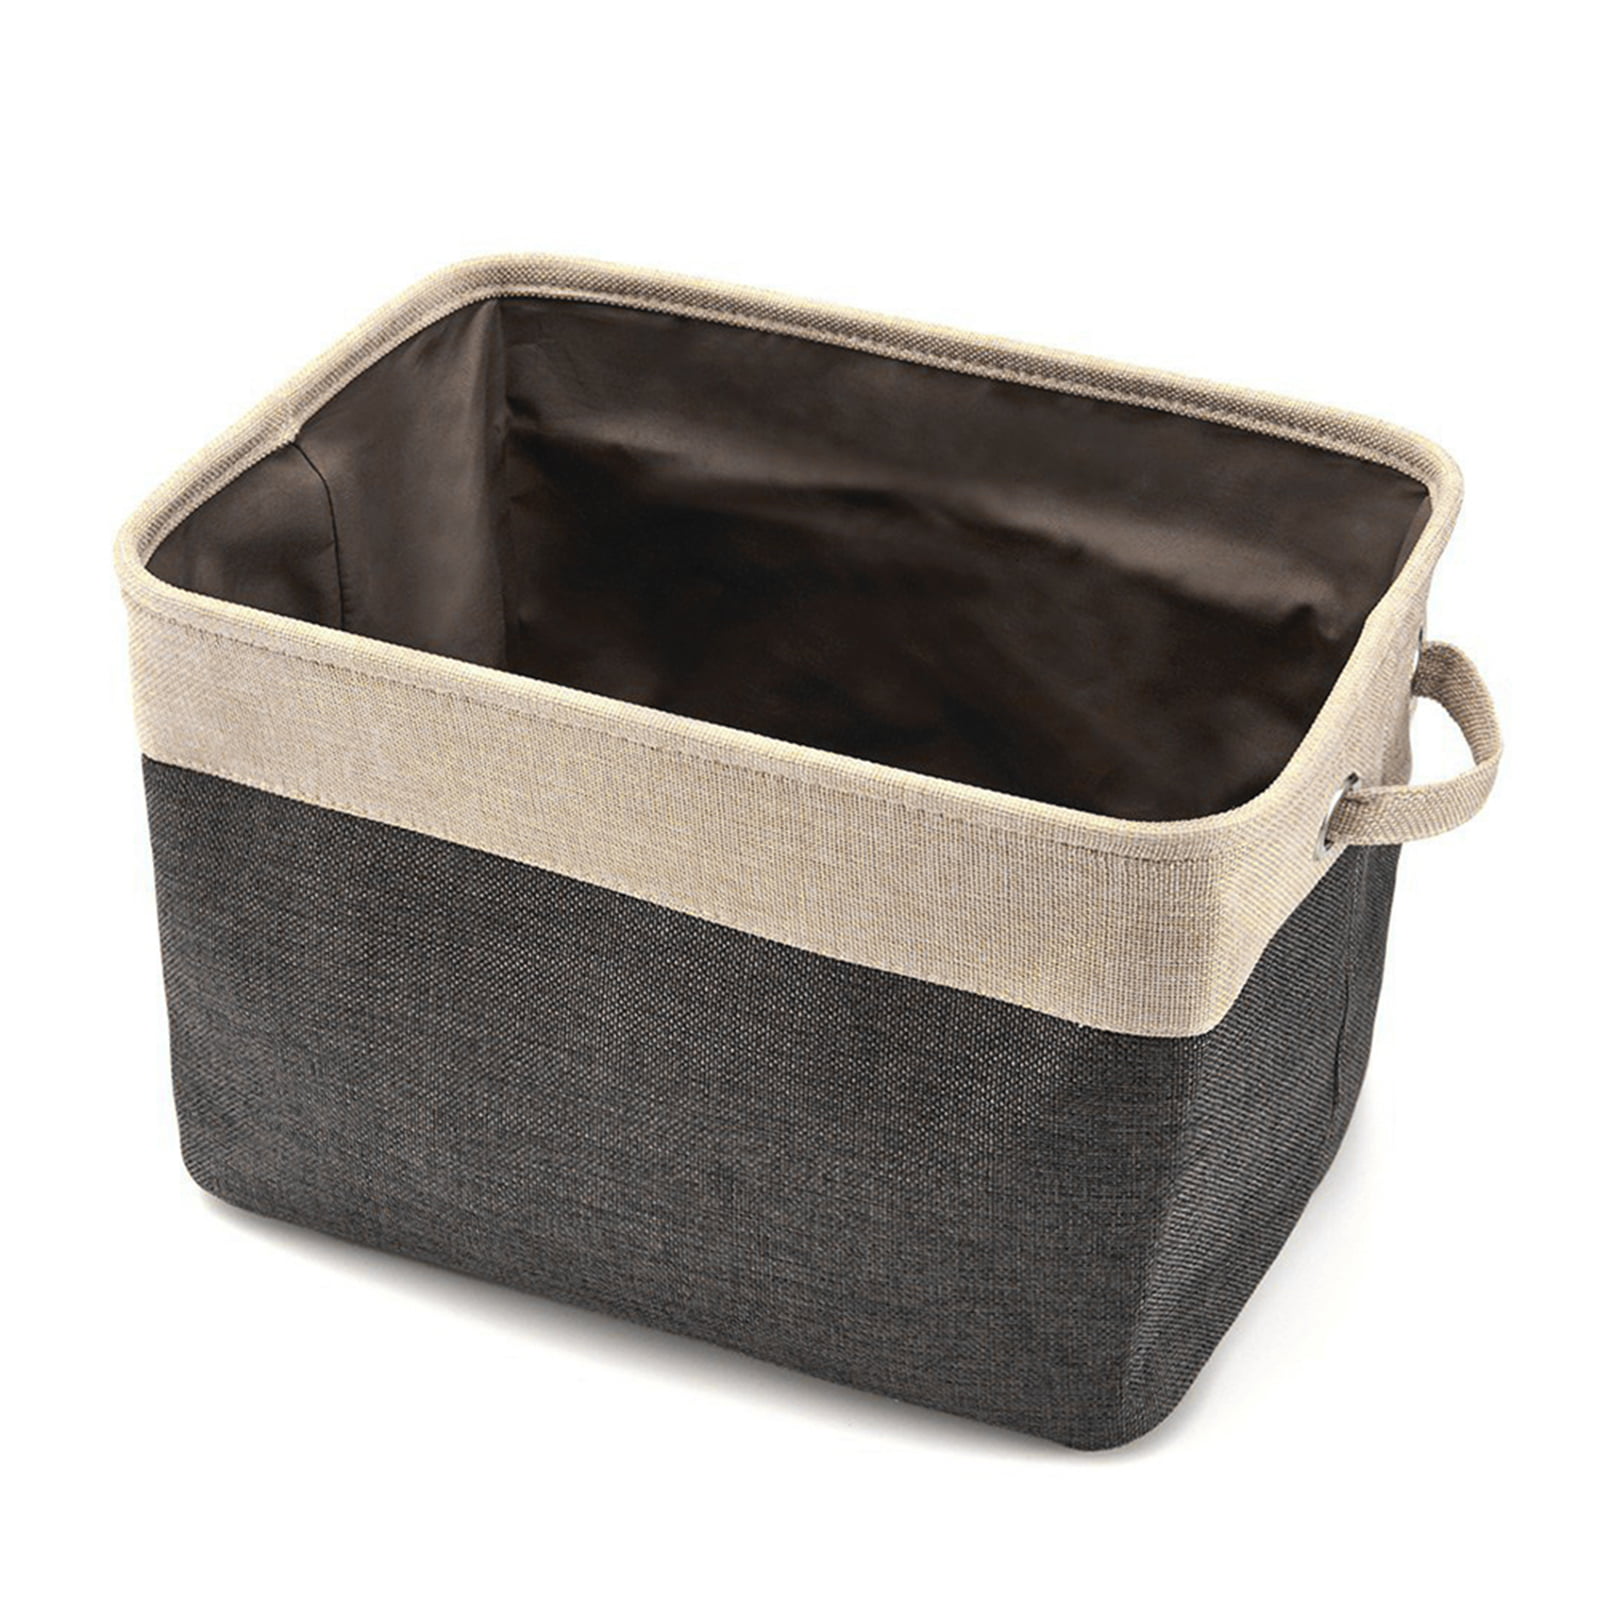 Details about   4 PCS Foldable Storage Cube Basket Bin Cloth Baskets for Shelves Cubby Organizer 